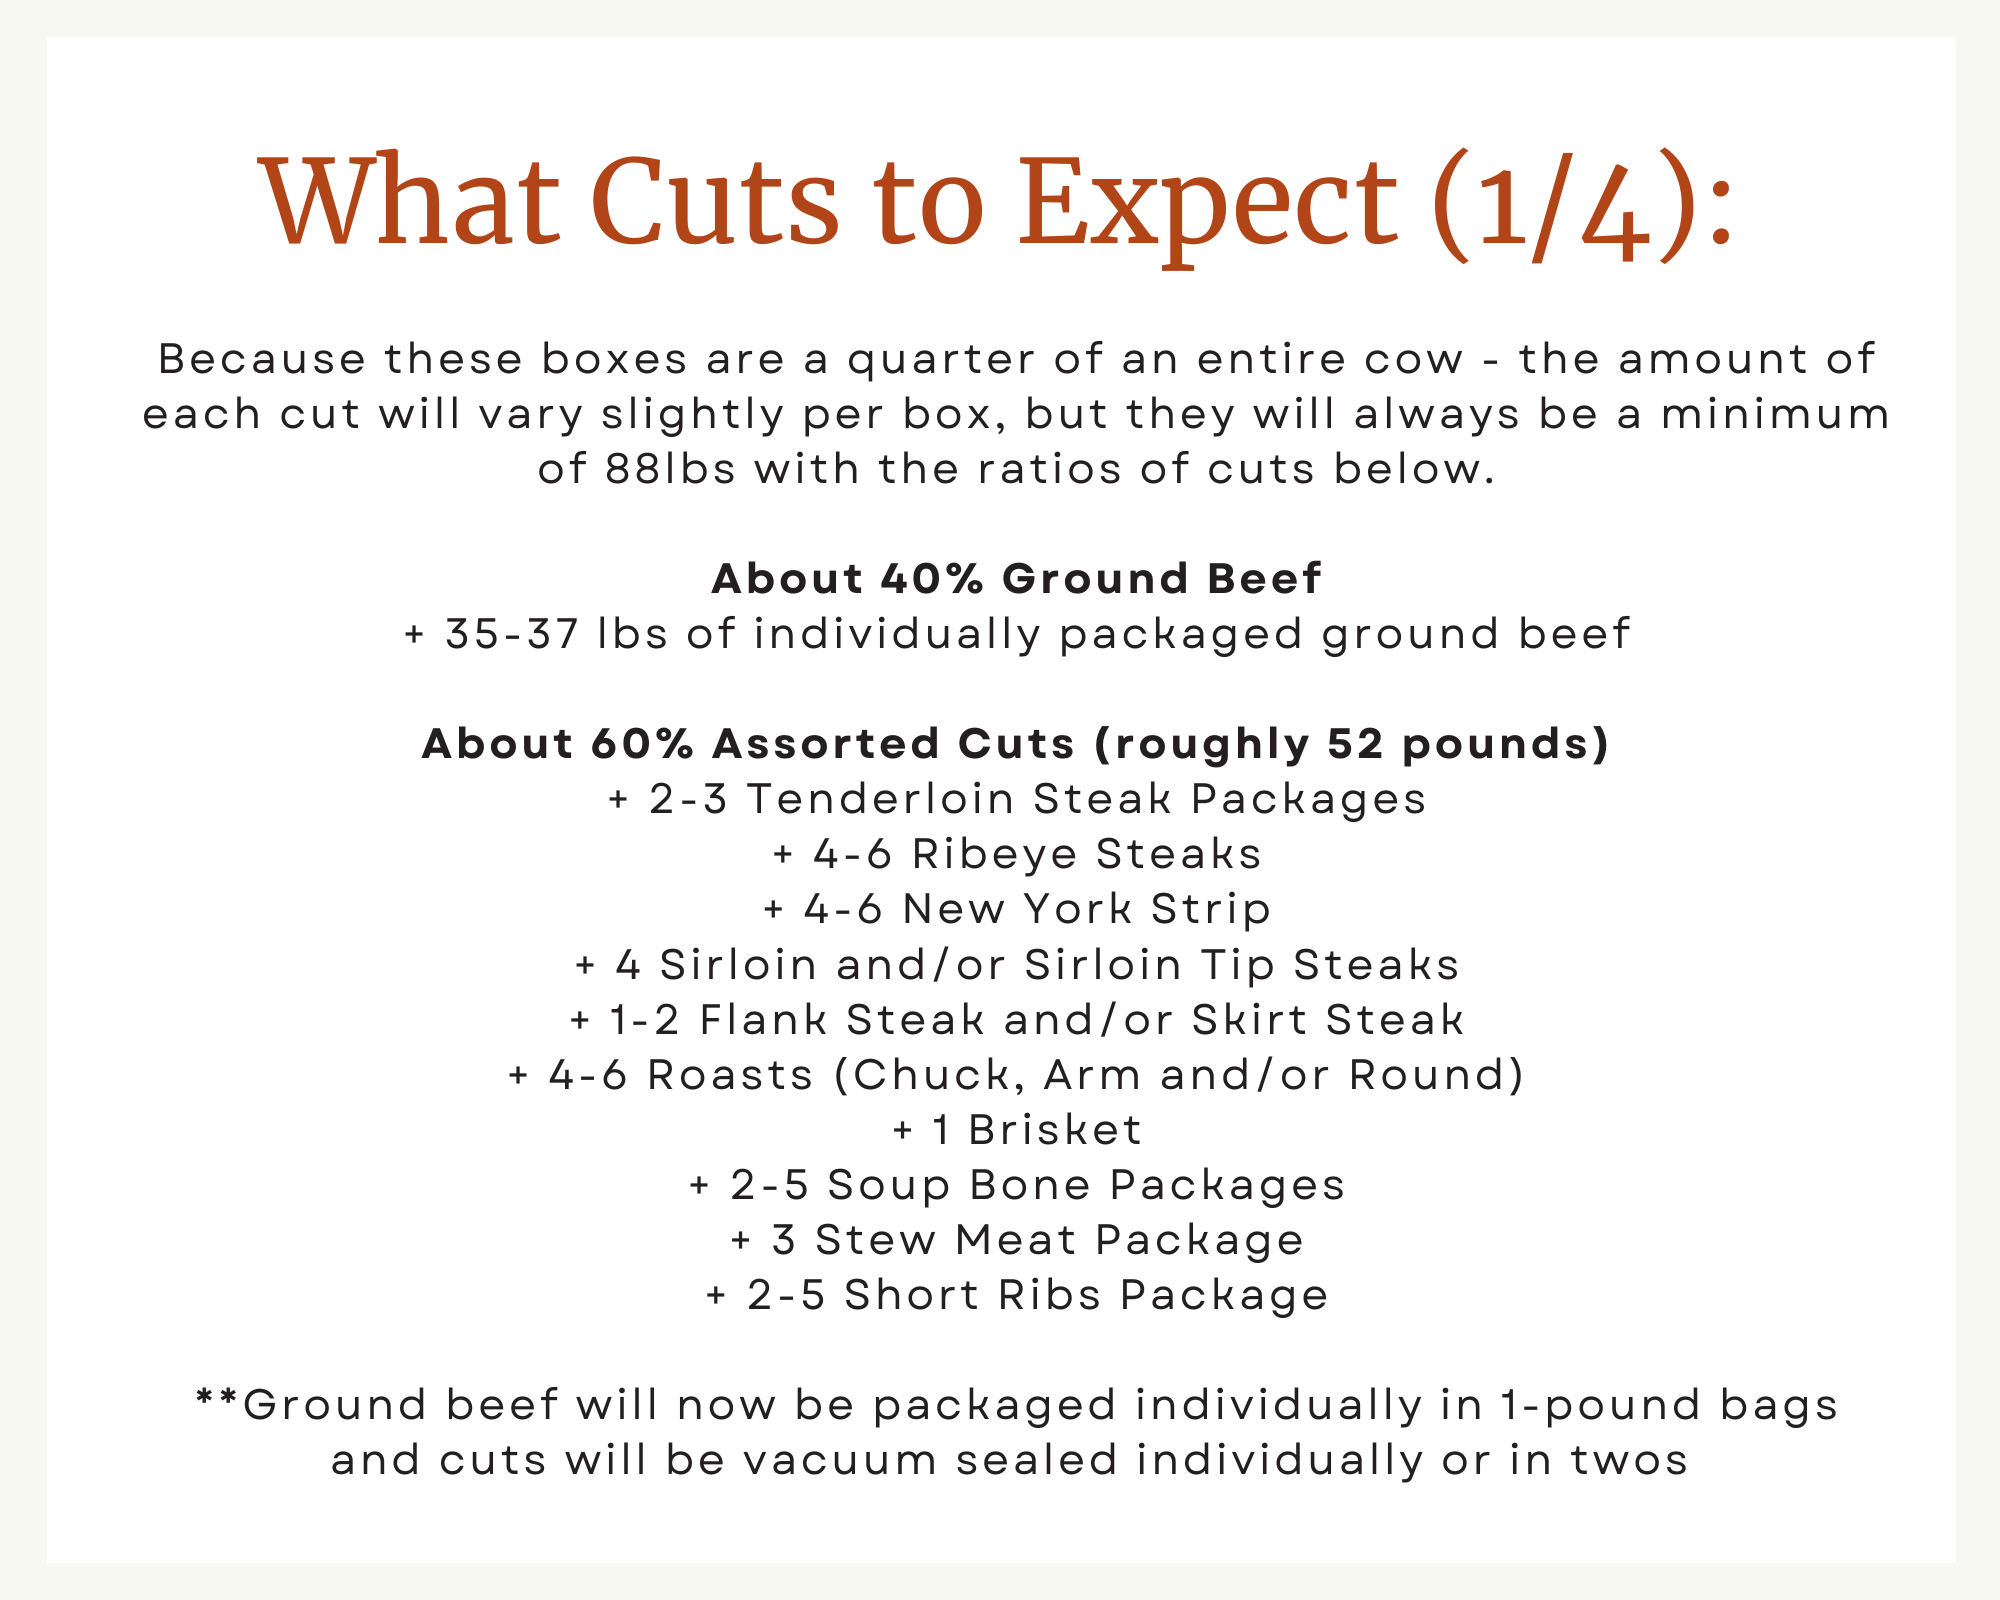 2024 Quarter Beef Share (88+ Pounds) Deposit